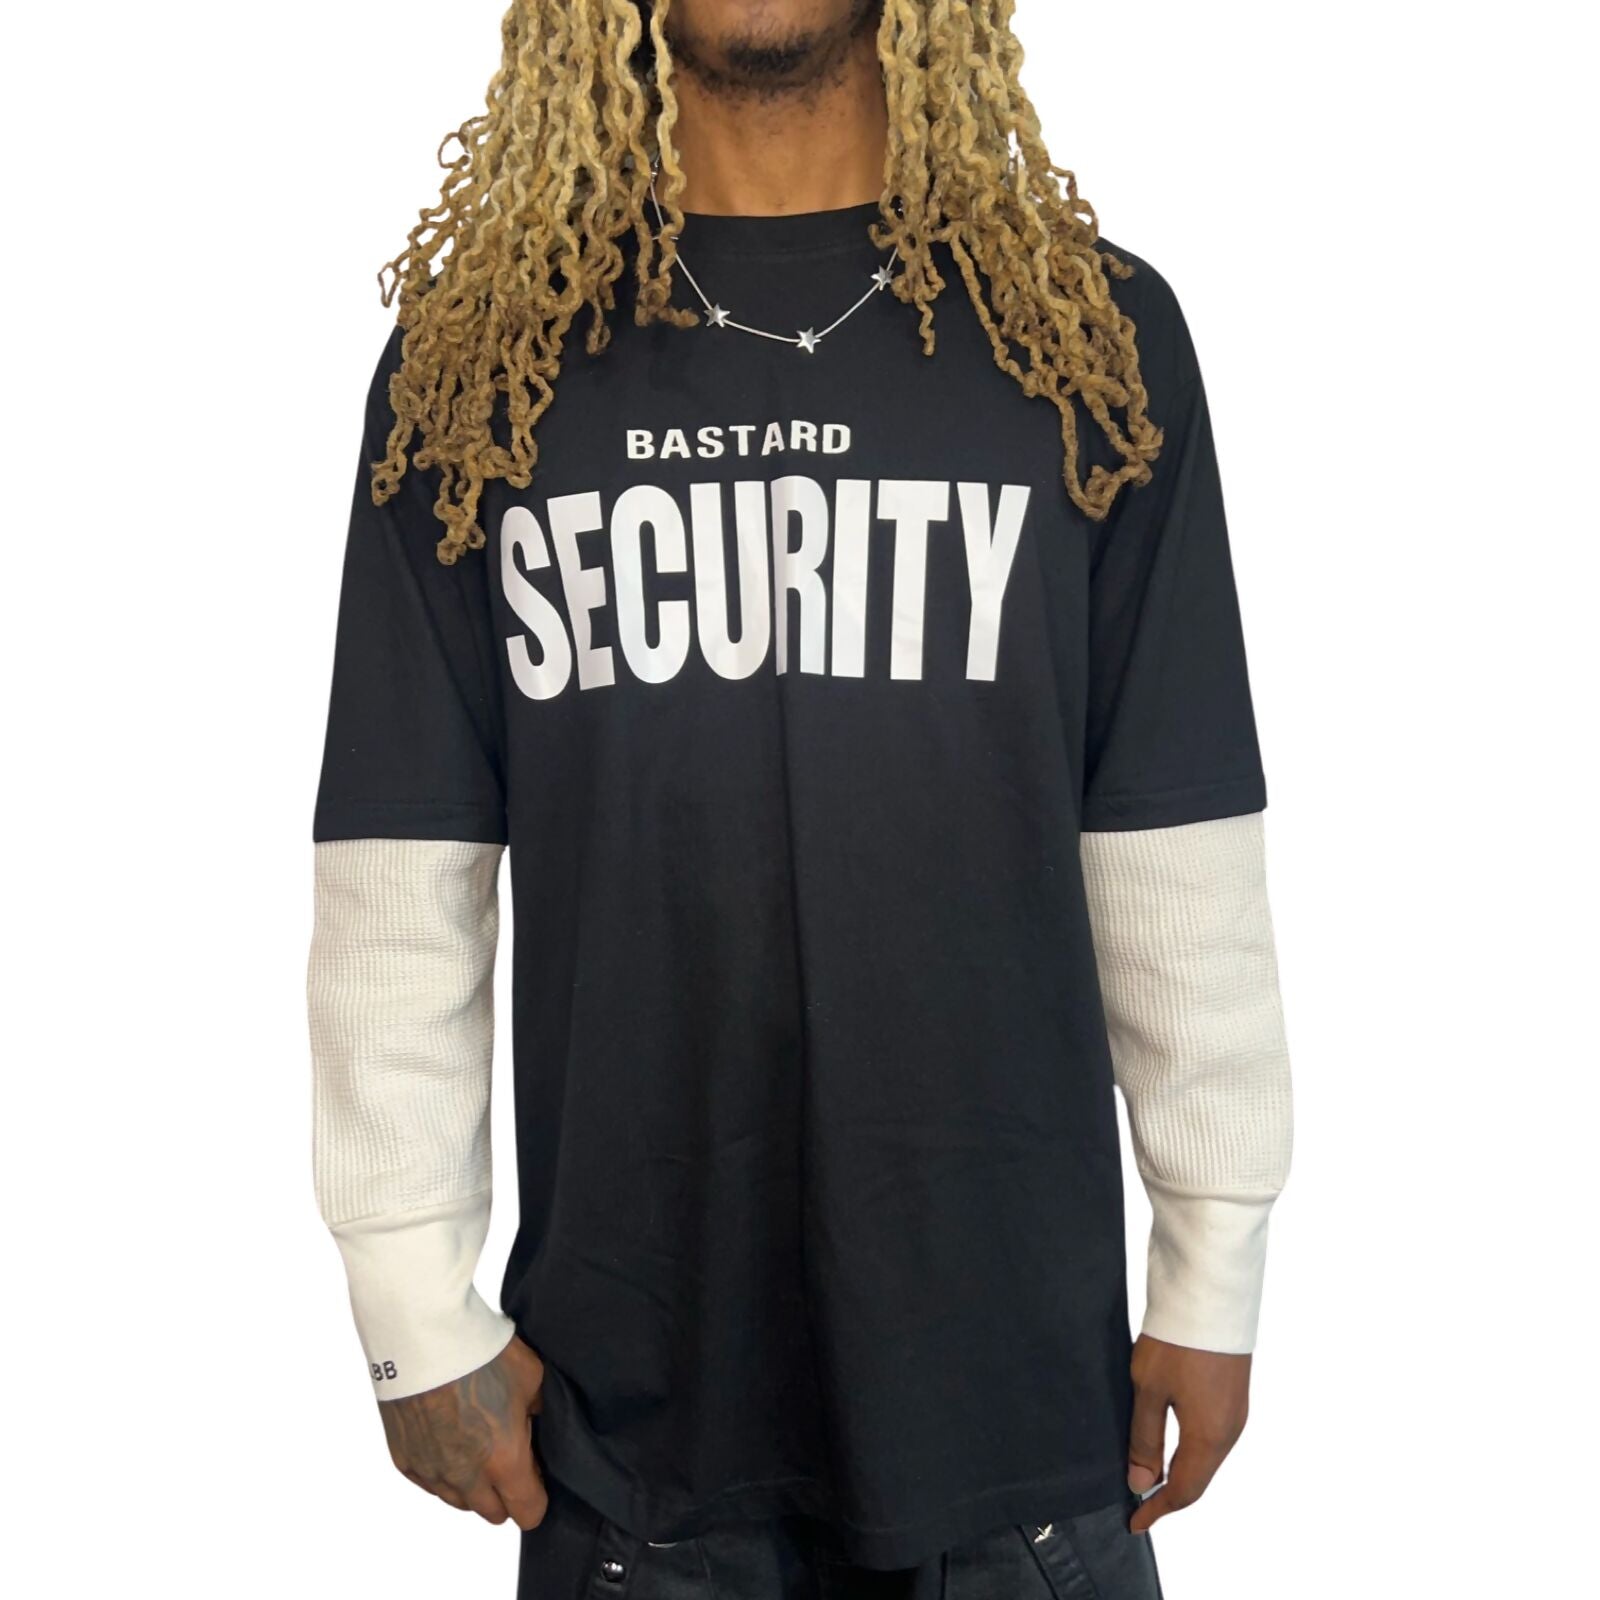 "Bastard Security" Long-sleeve Shirt